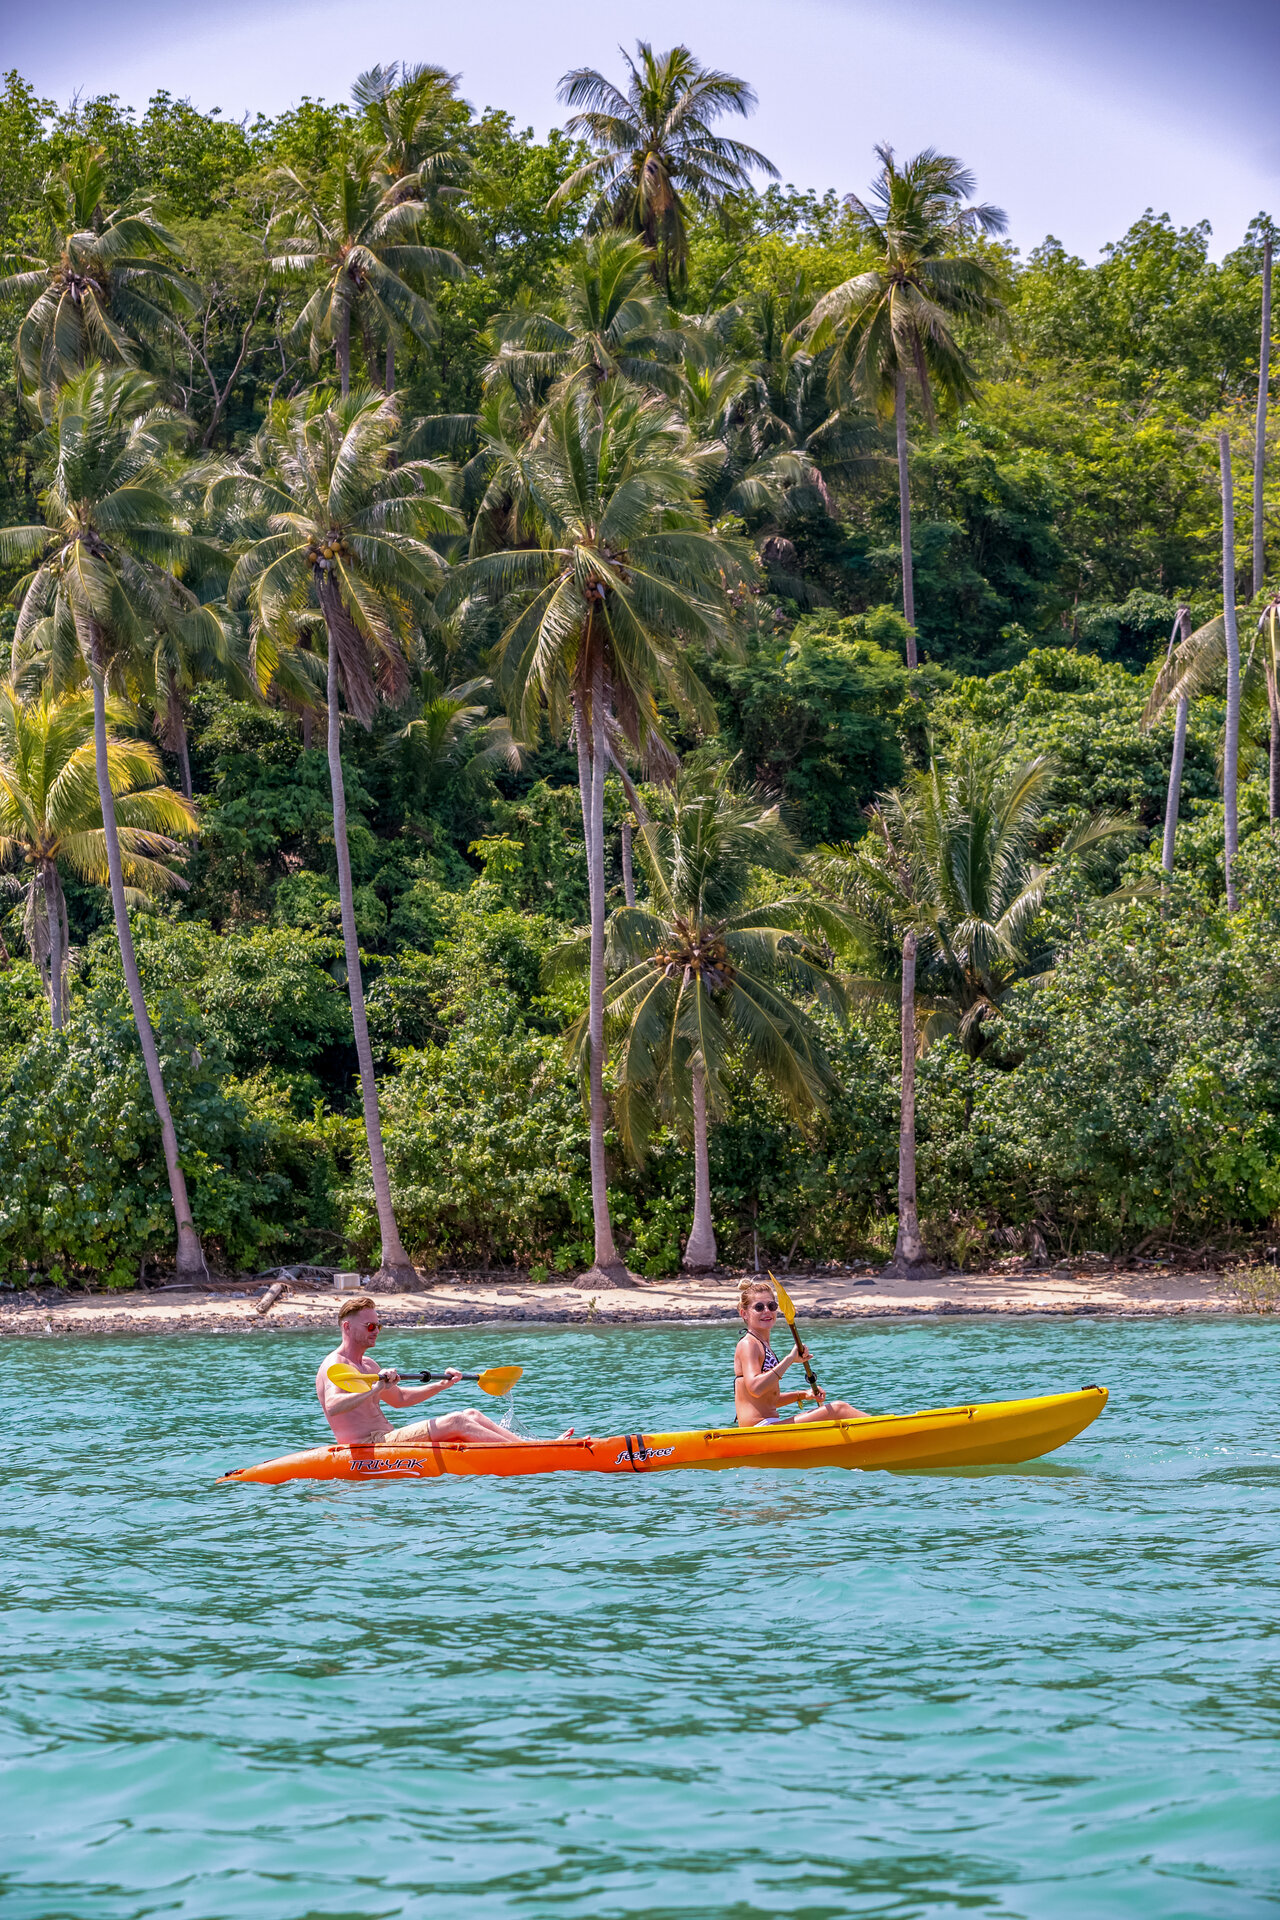 The Village Coconut Island